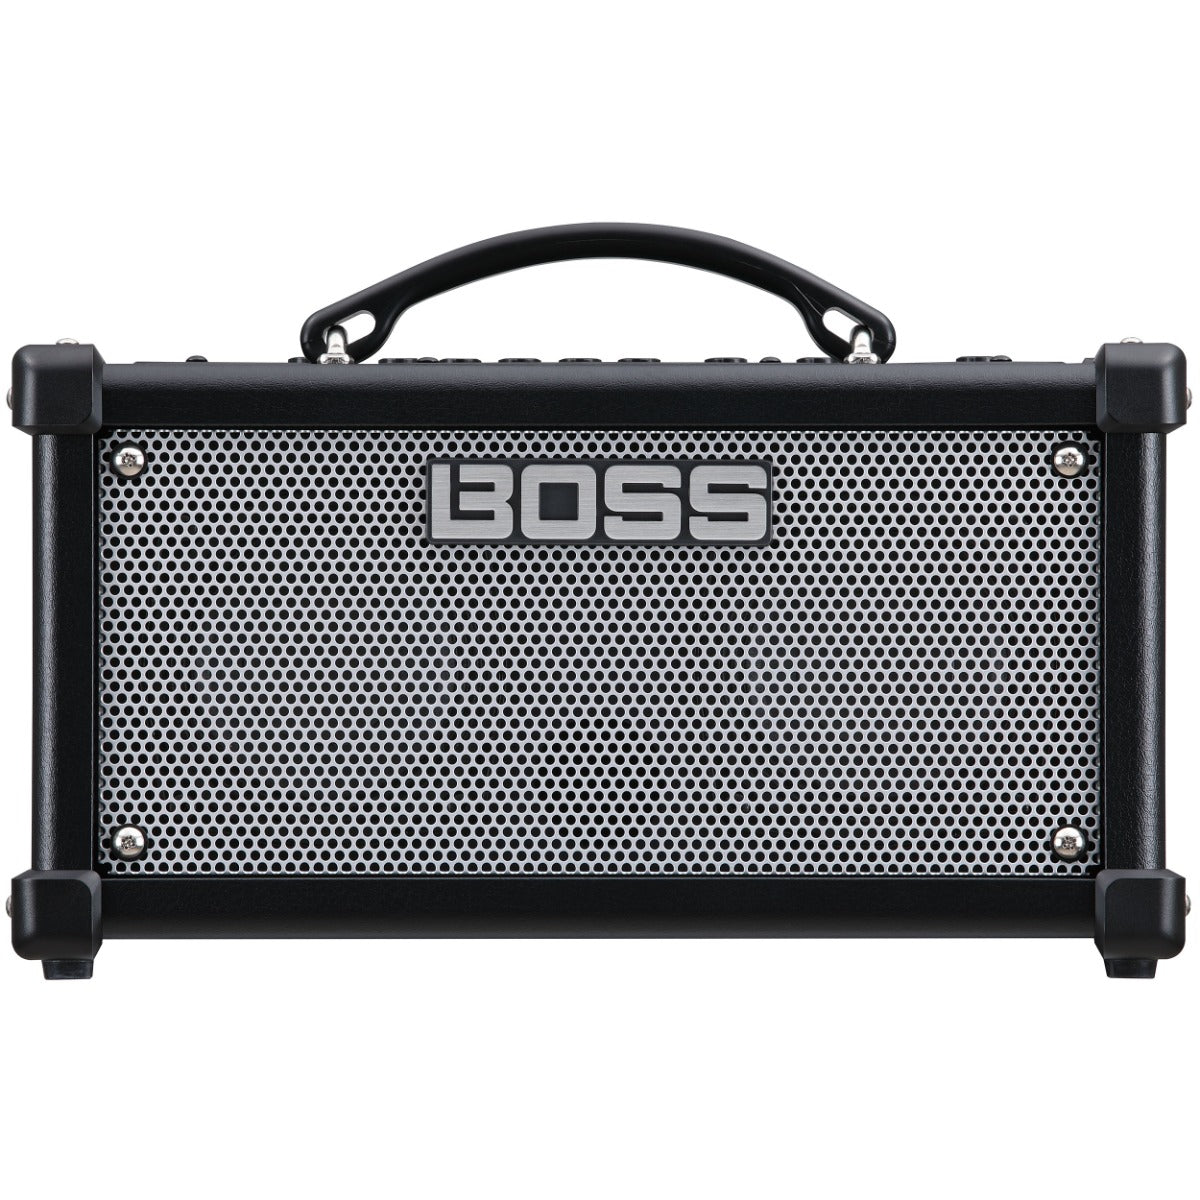 BOSS Dual Cube LX Guitar Amplifier view 2